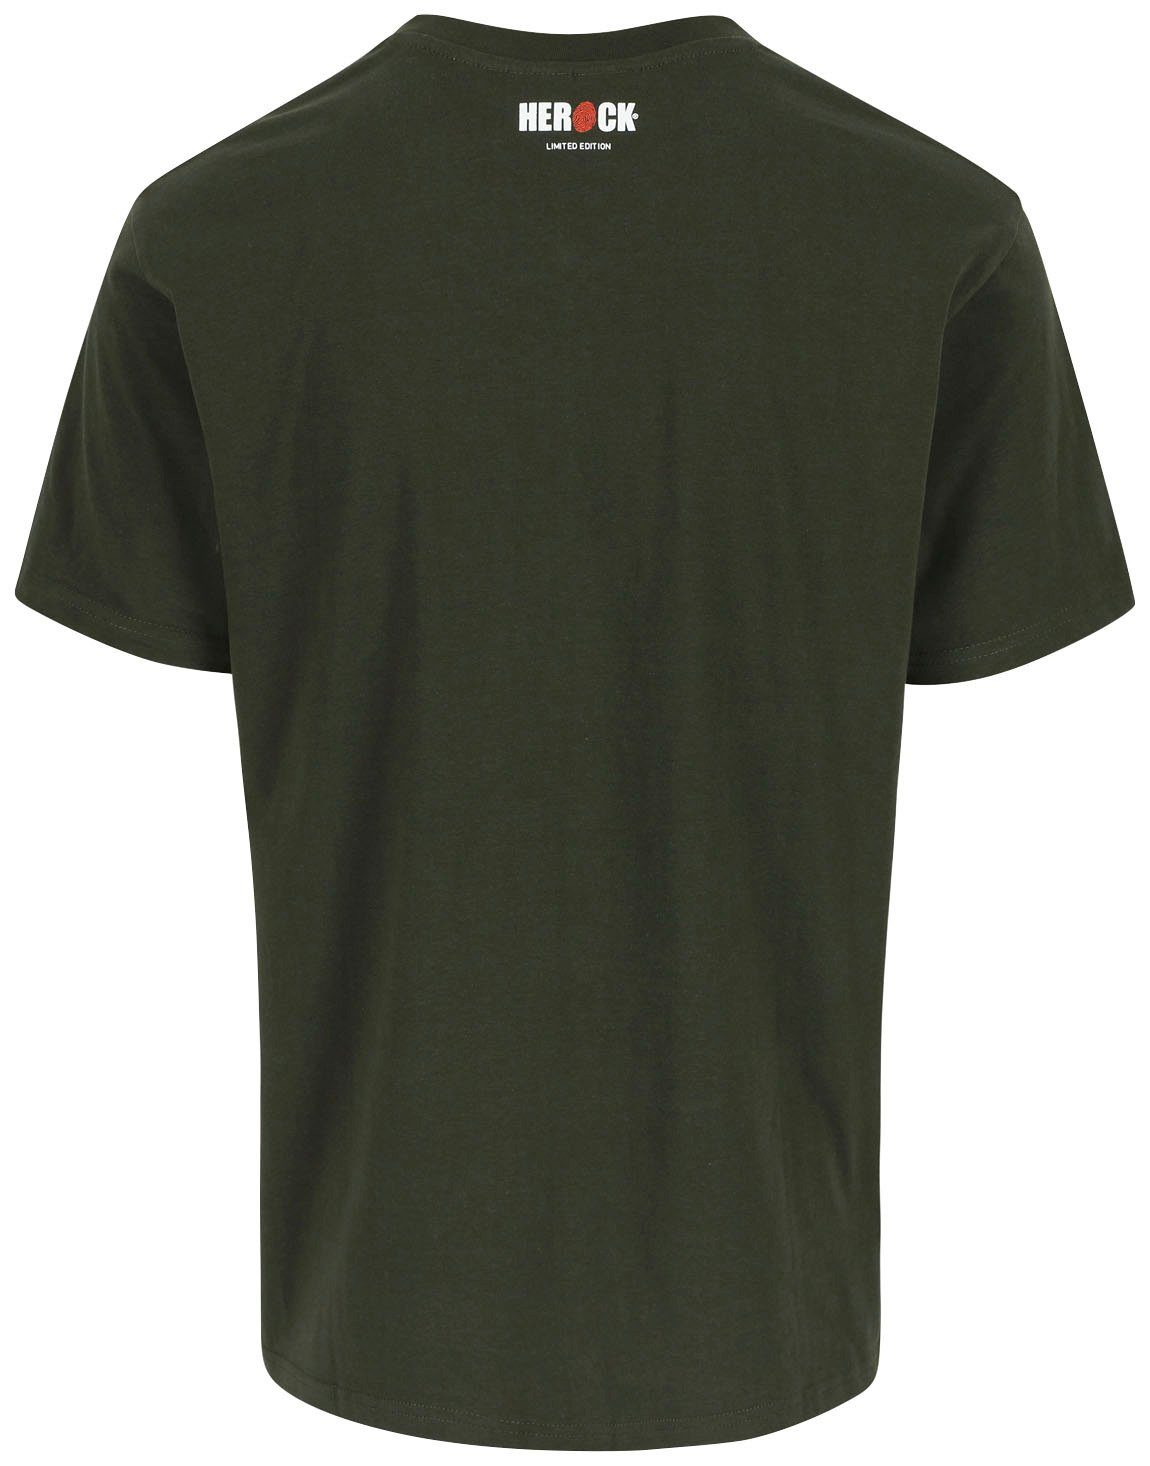 Limited Edition Herock Barber T-Shirt